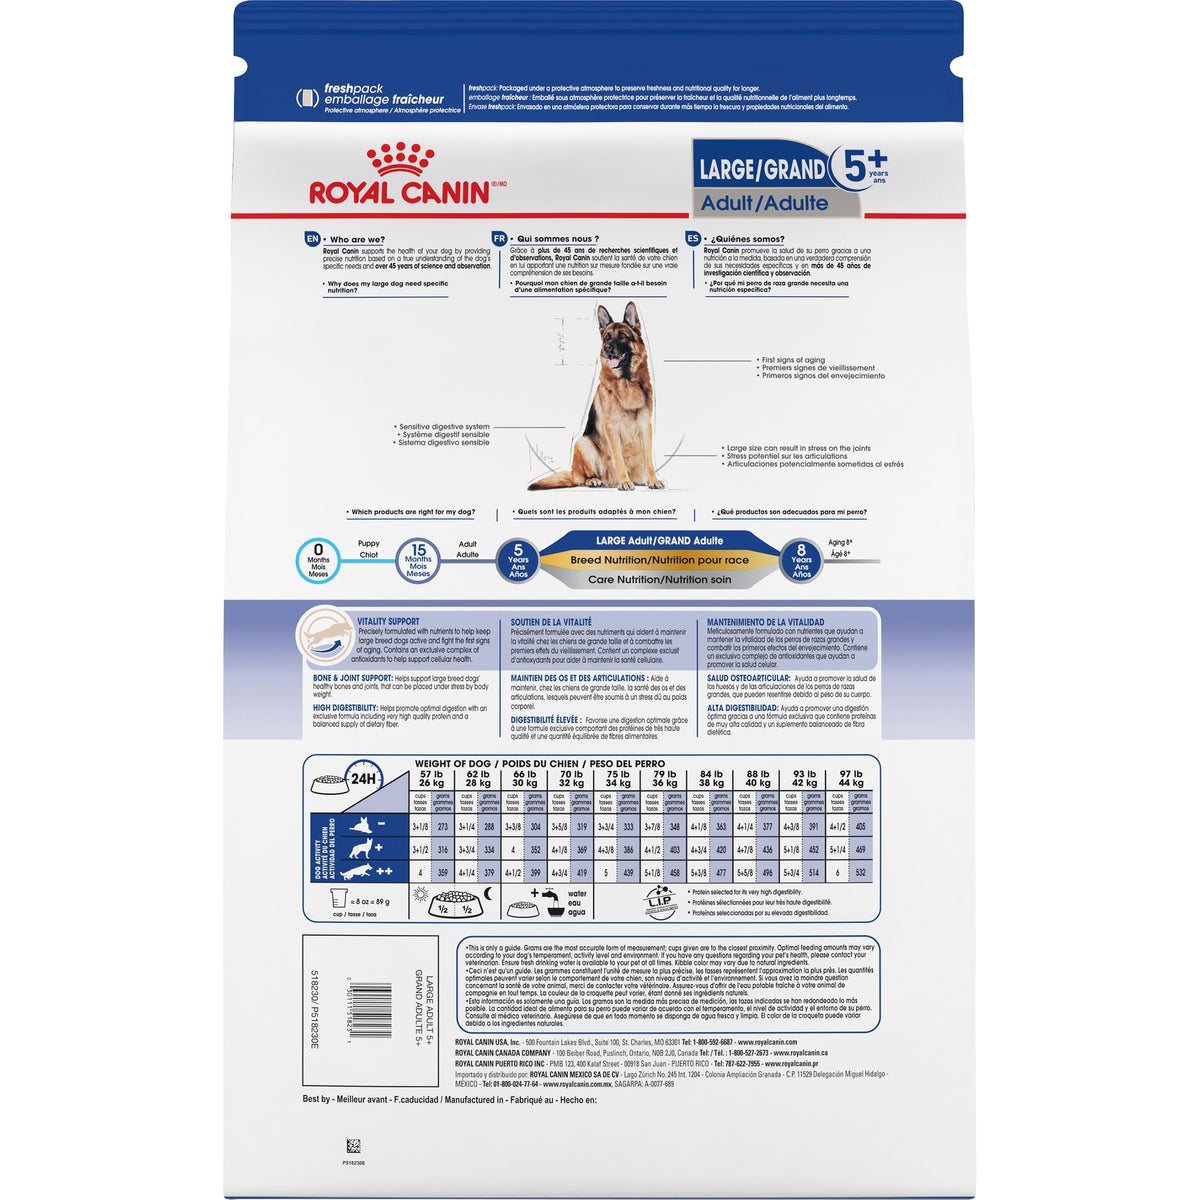 Royal Canin LARGE Adult 5+ Dry Dog Food (30lb)